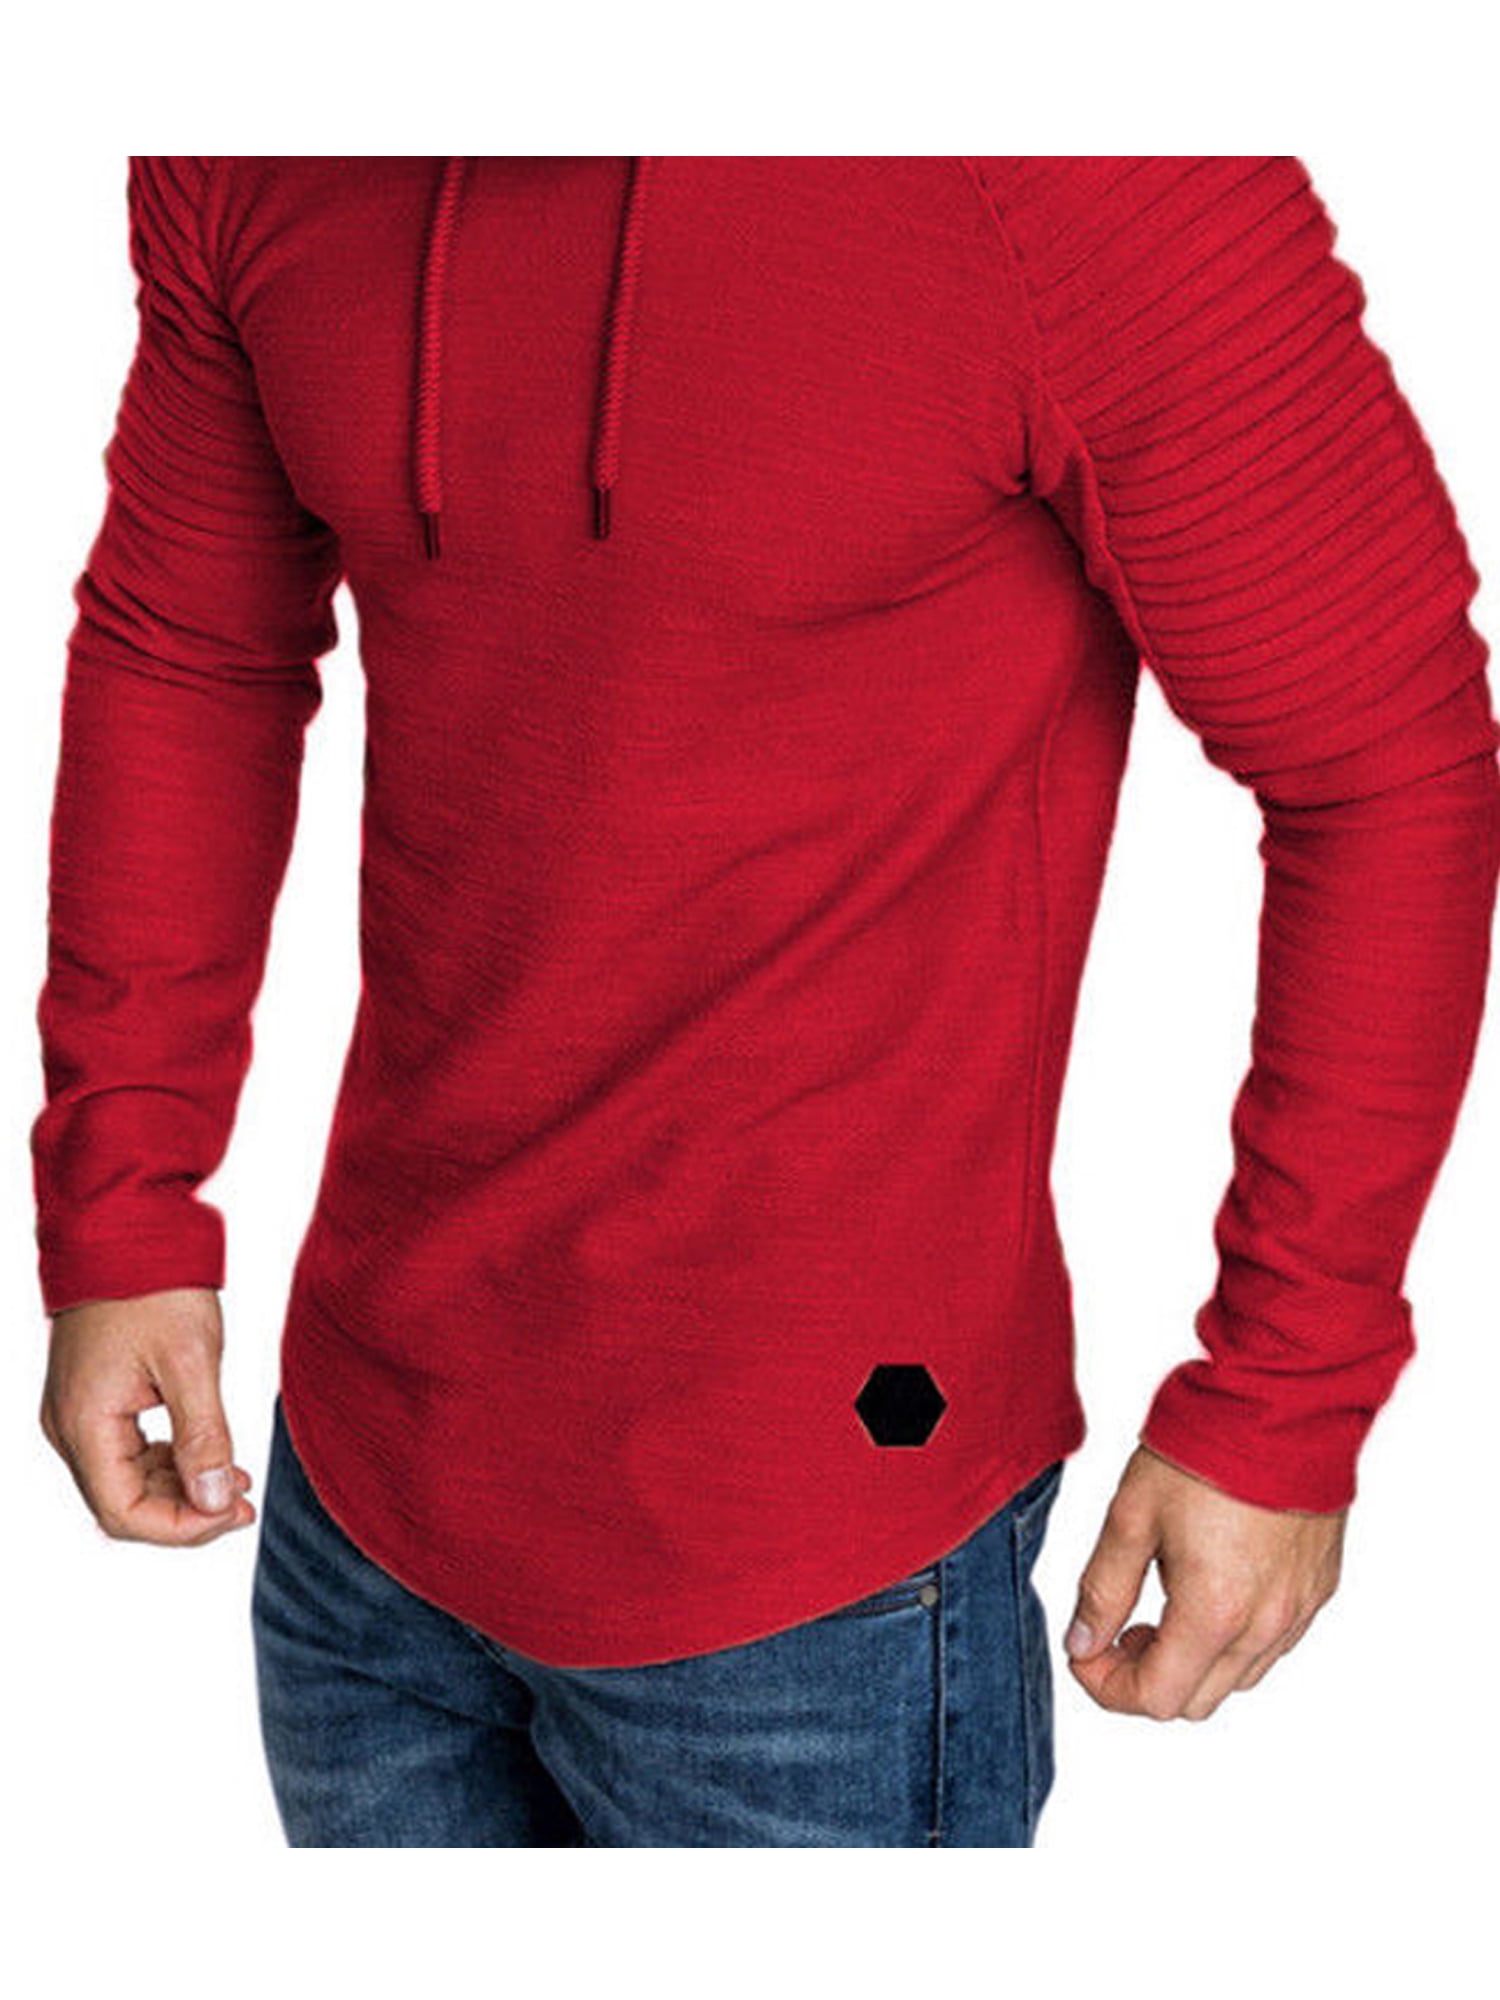 Long Sleeve Pocket Hooded Sweatshirt Breathable Activewear Sport Outwear Muscle Shirt Mens Tops MISYAA Hoodies for Men